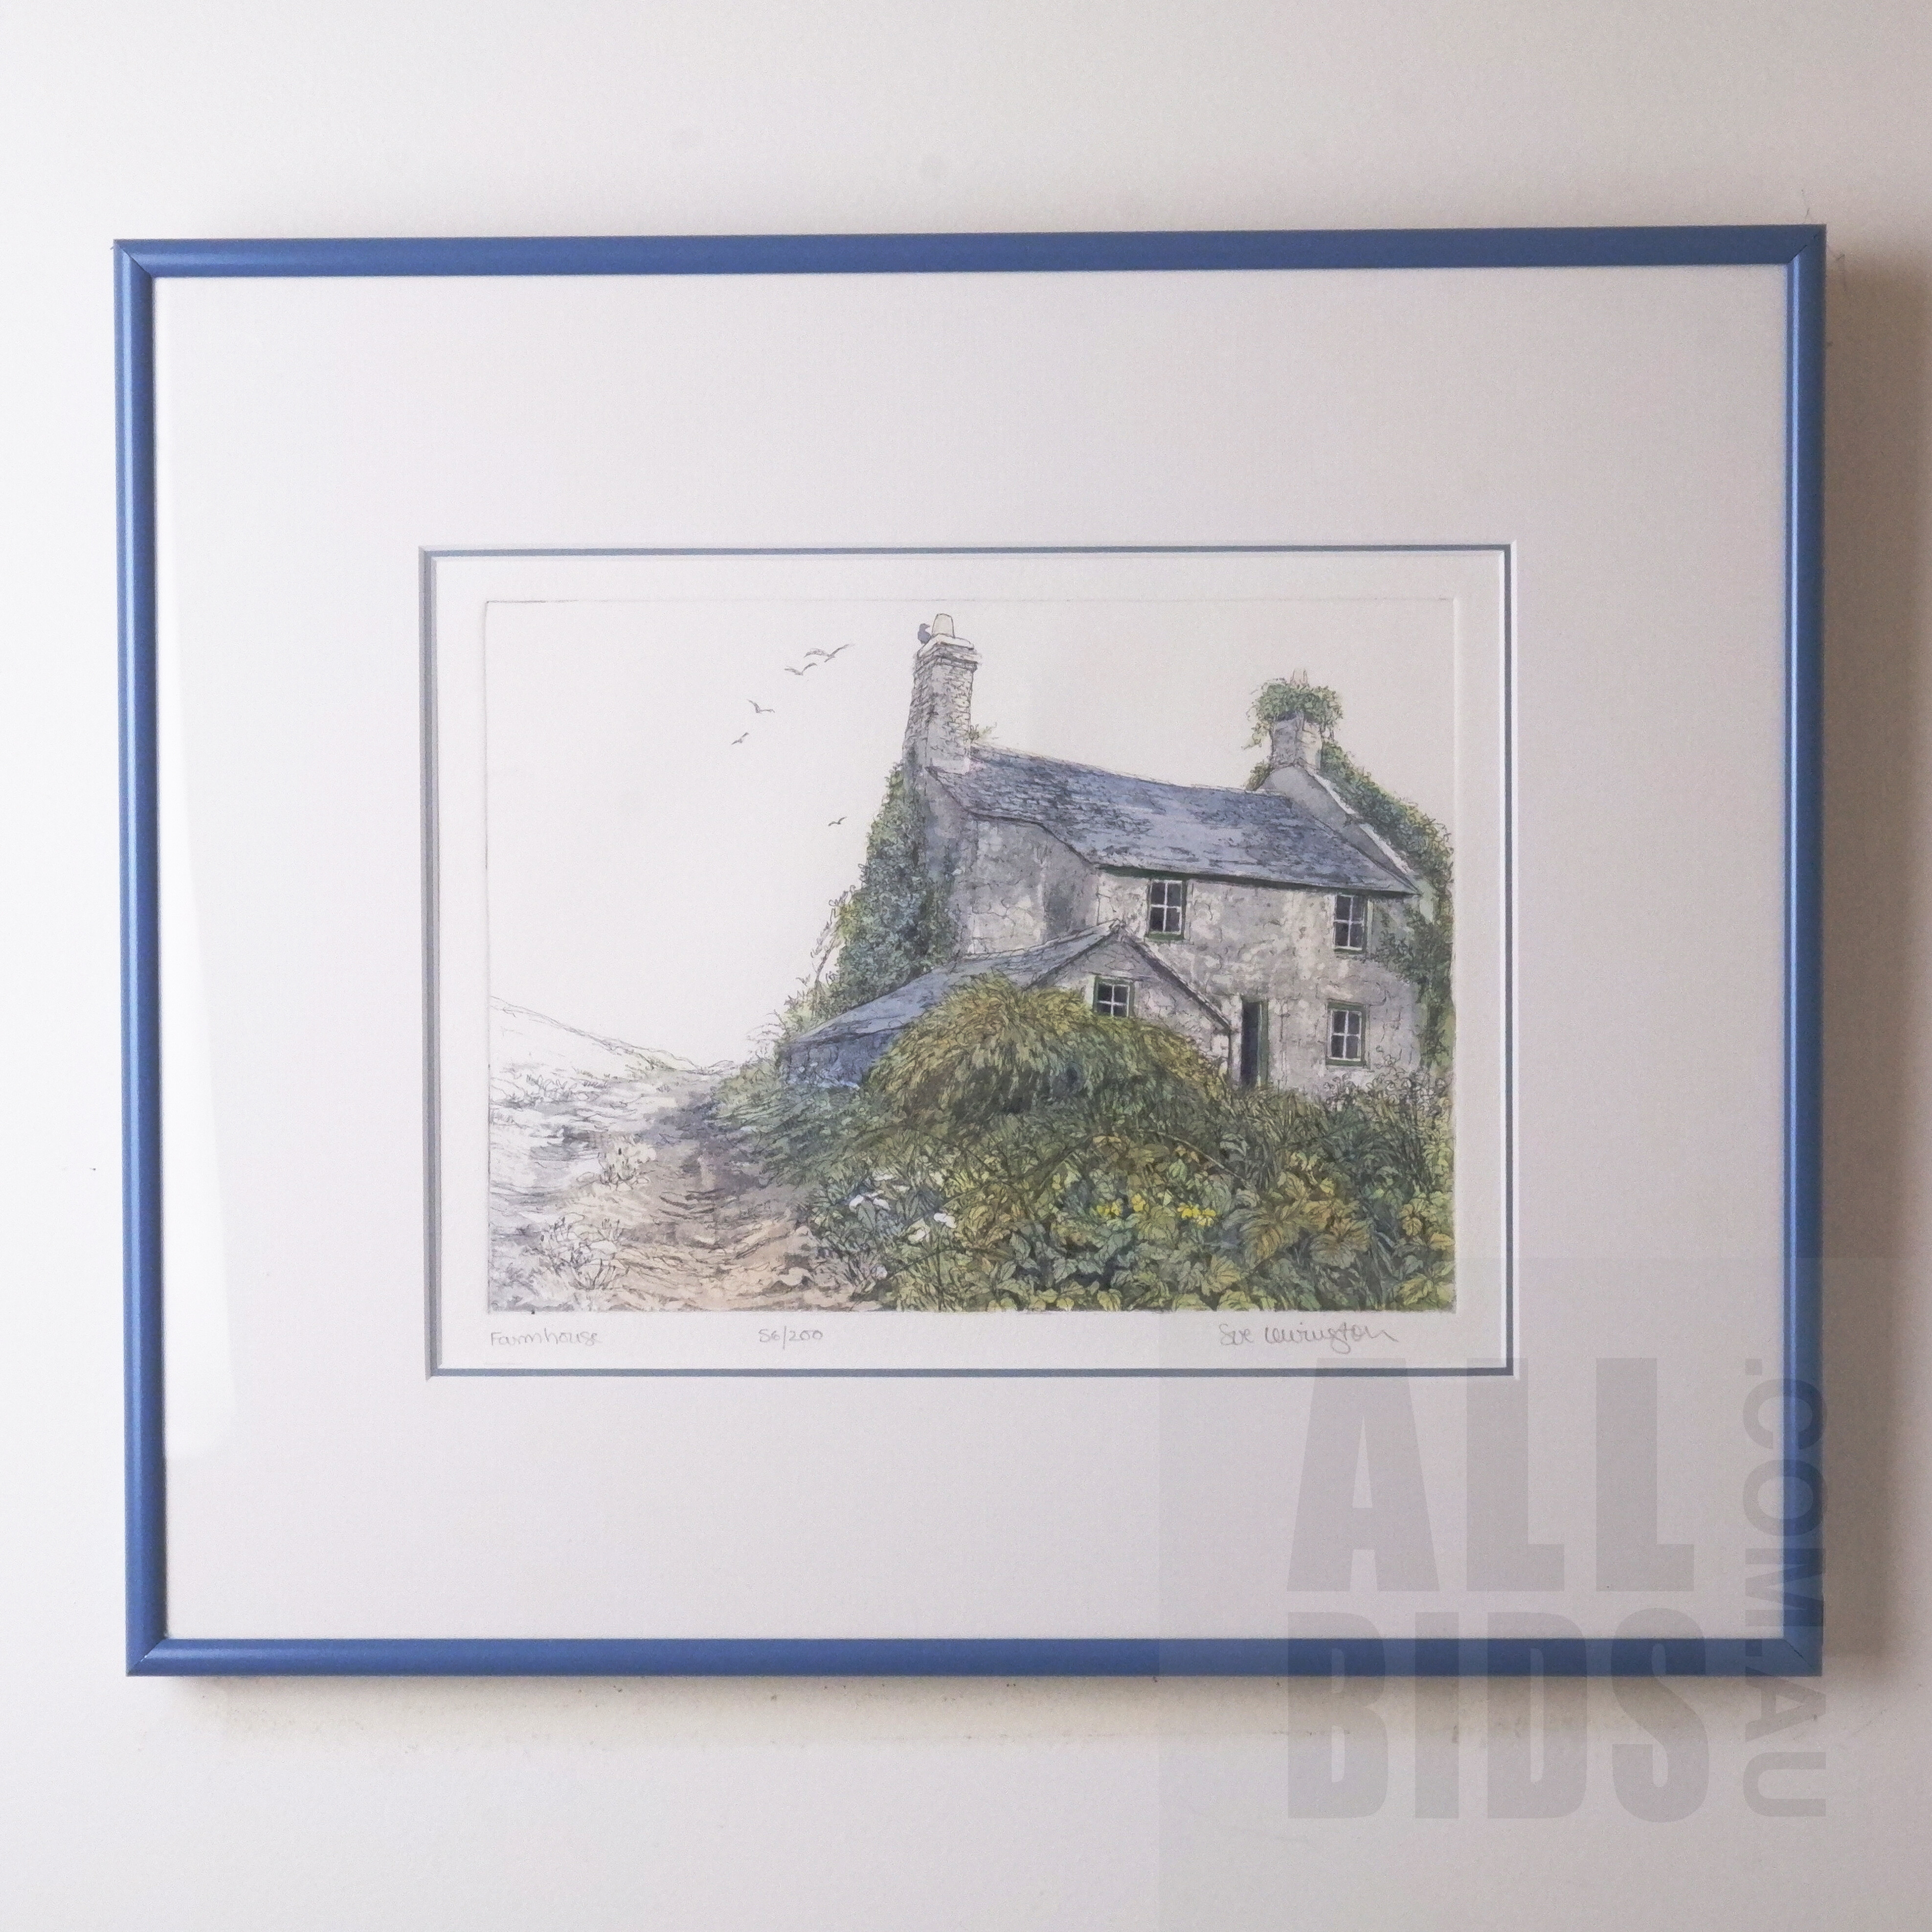 'Sue Lewington (born 1956, British), Farmhouse, Etching & Aquatint, 17 x 23.5 cm (image size)'